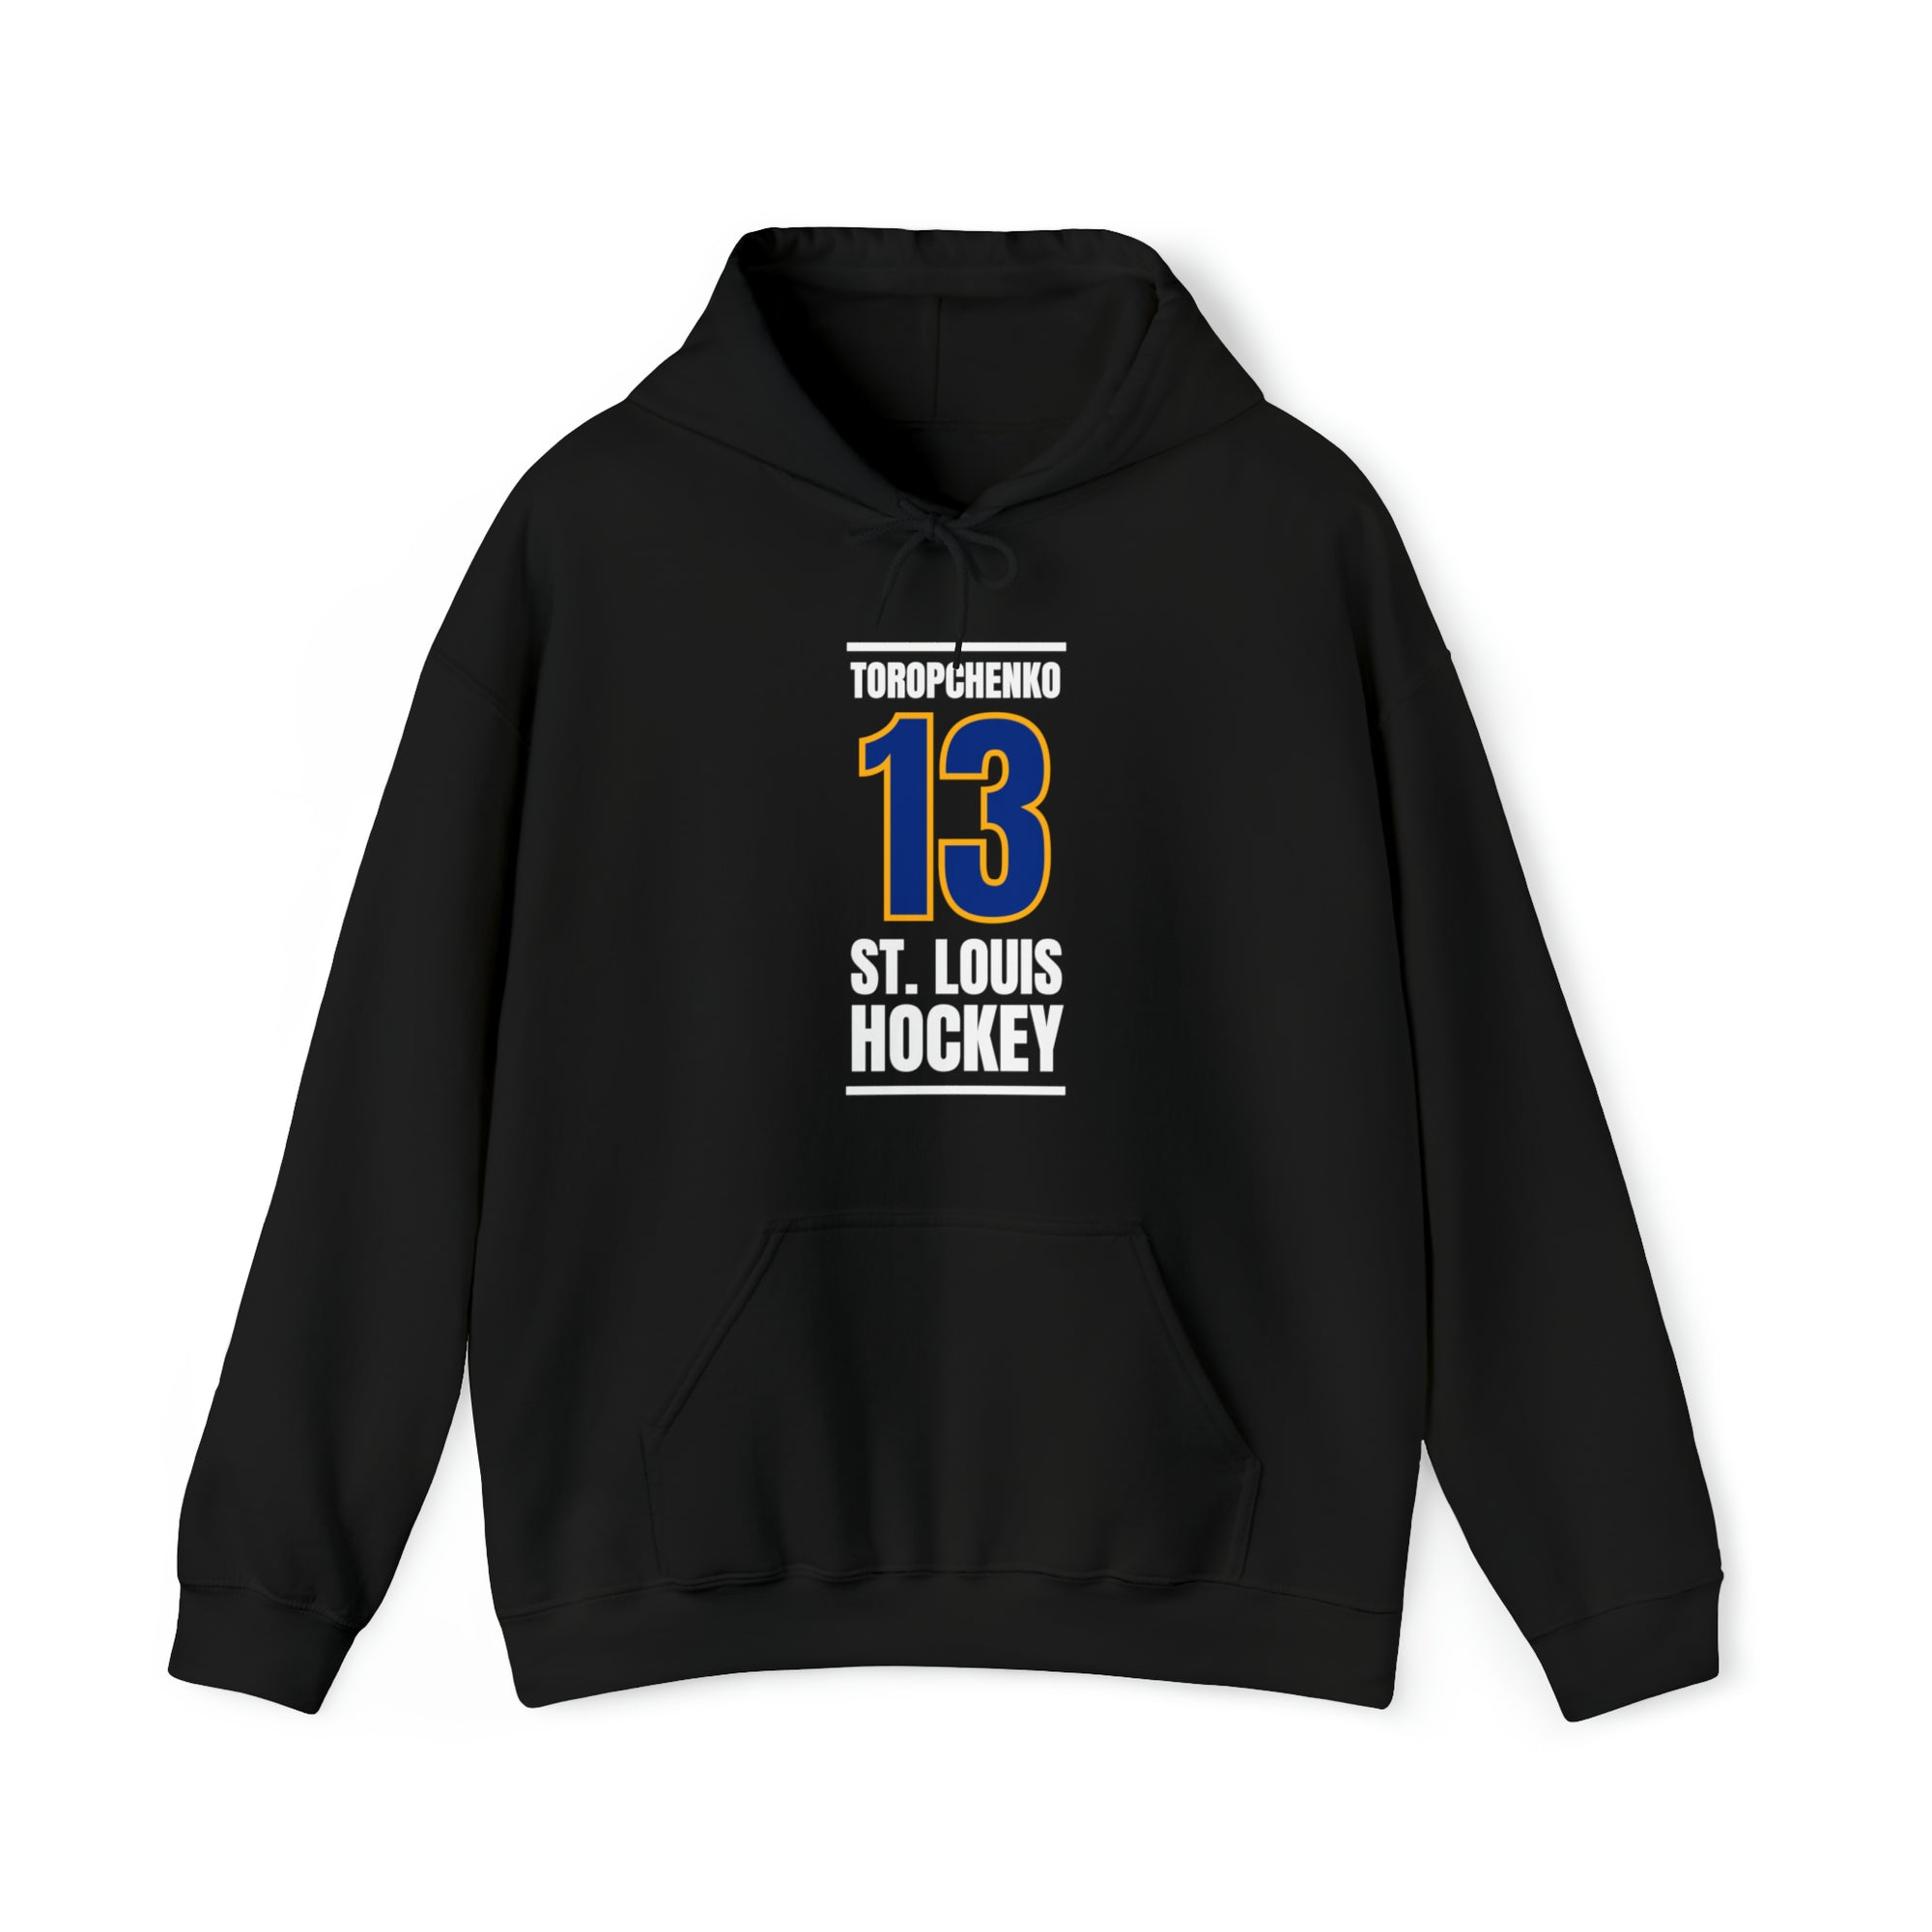 Toropchenko 13 St. Louis Hockey Blue Vertical Design Unisex Hooded Sweatshirt